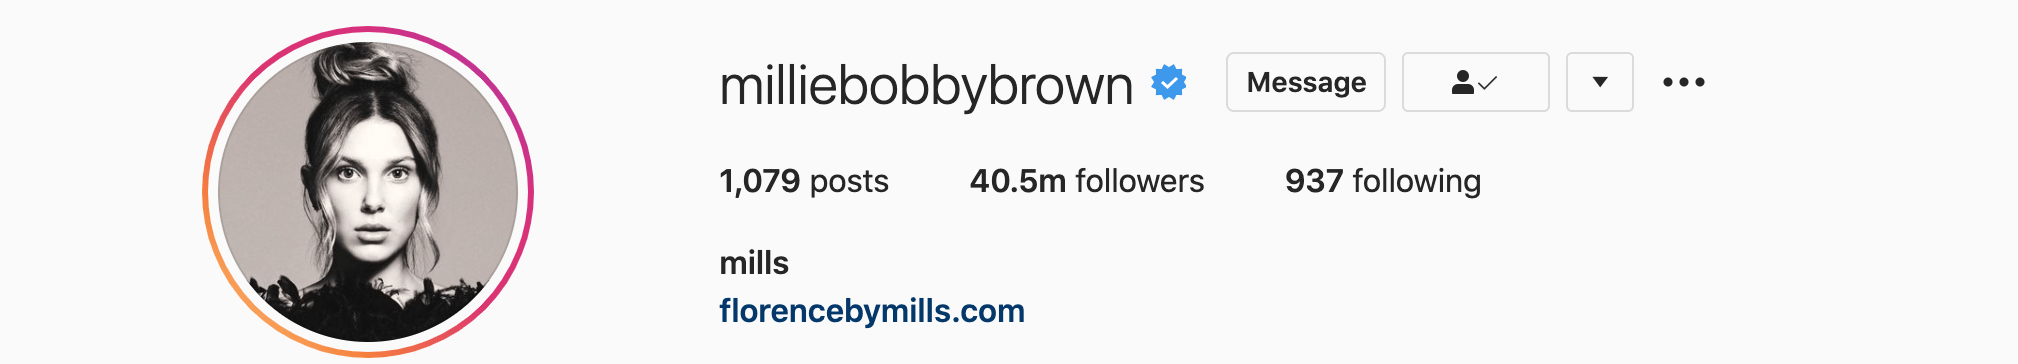 Top Instagram Influencers - MILLIE BOBBY BROWN